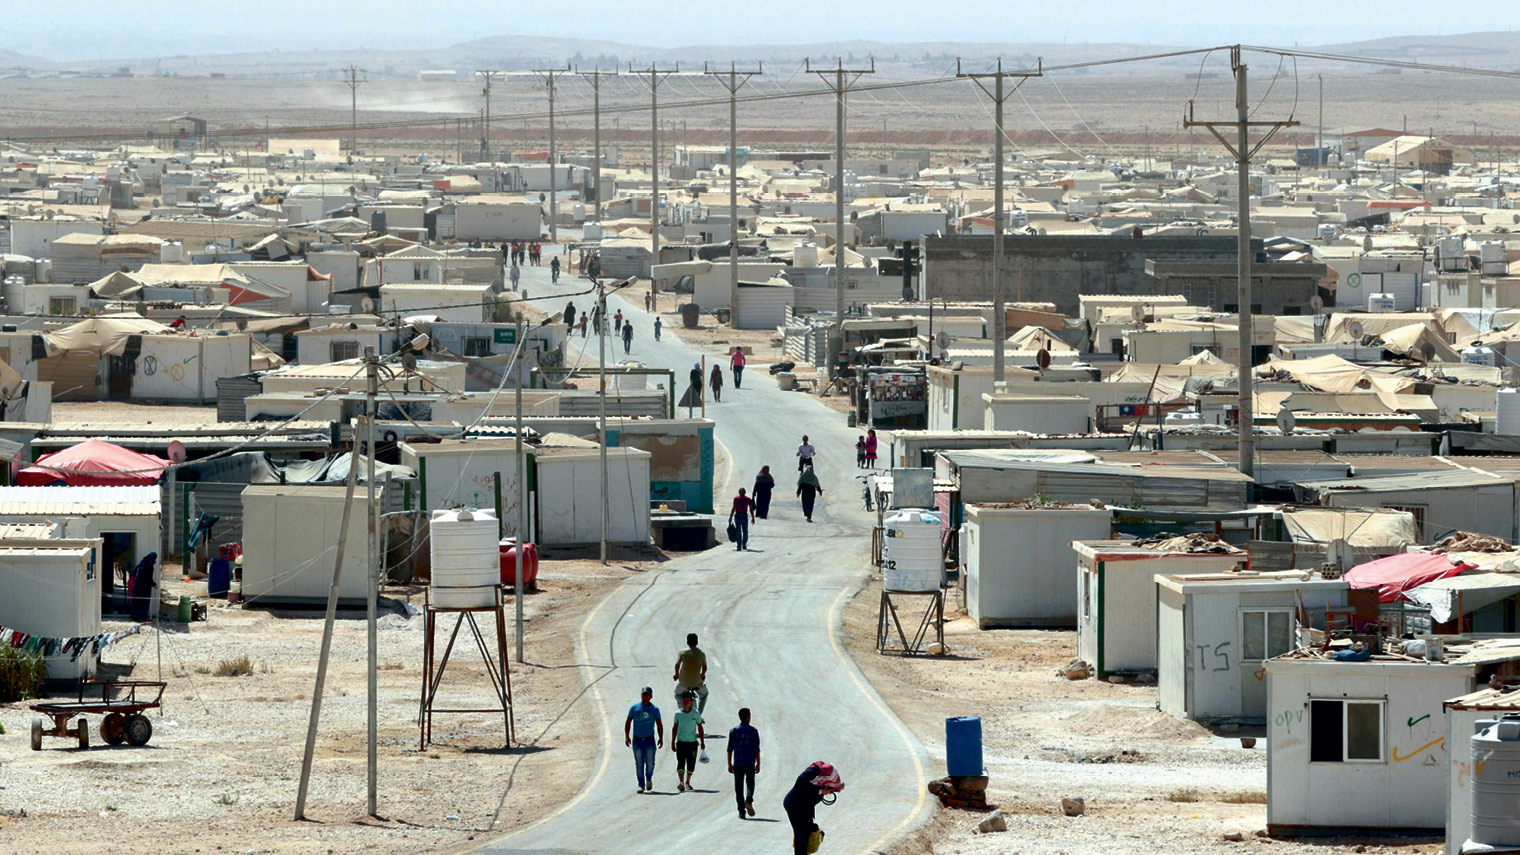 The UN-run Zaatari camp for Syrian refugees, north-east of Amman